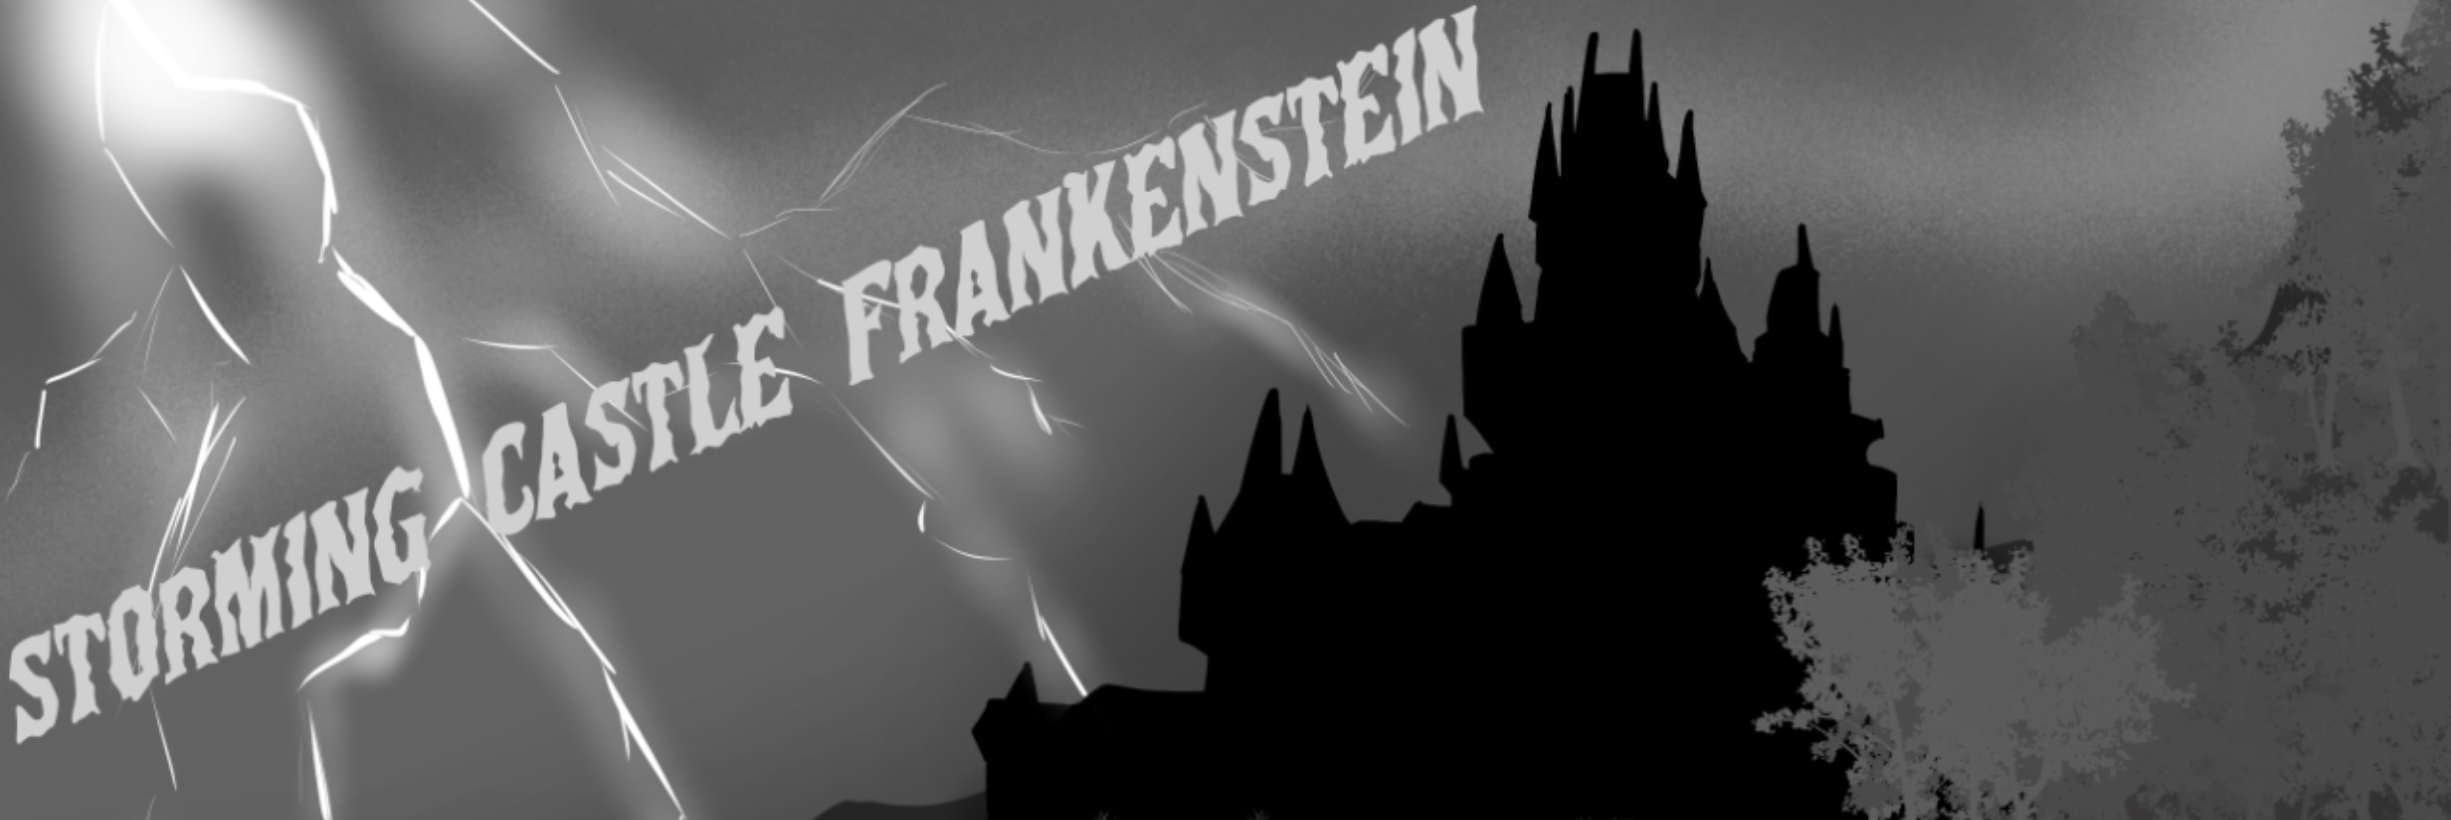 Storming Castle Frankenstein